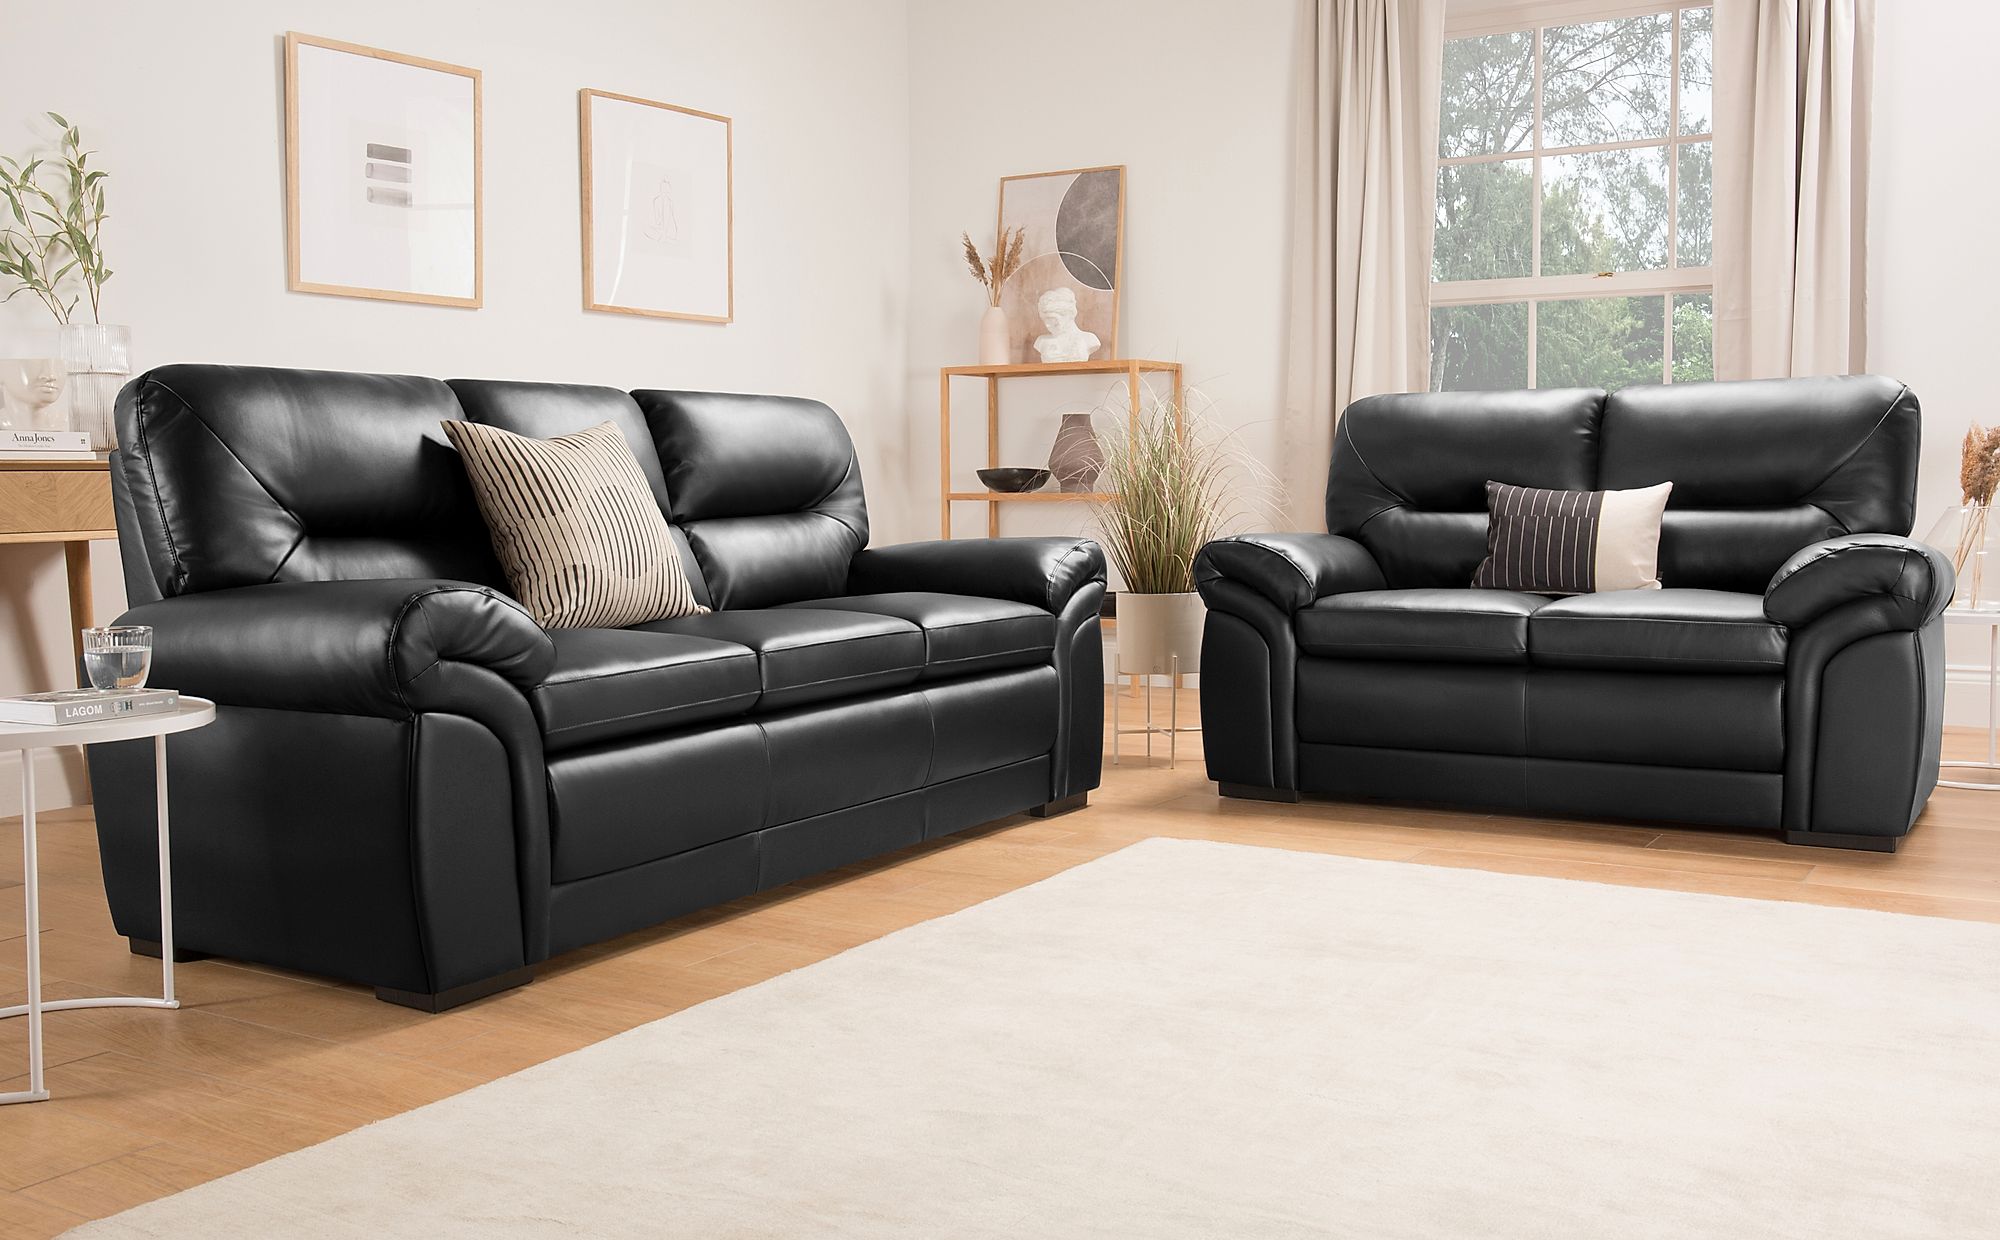 leather sofa conditioner ireland